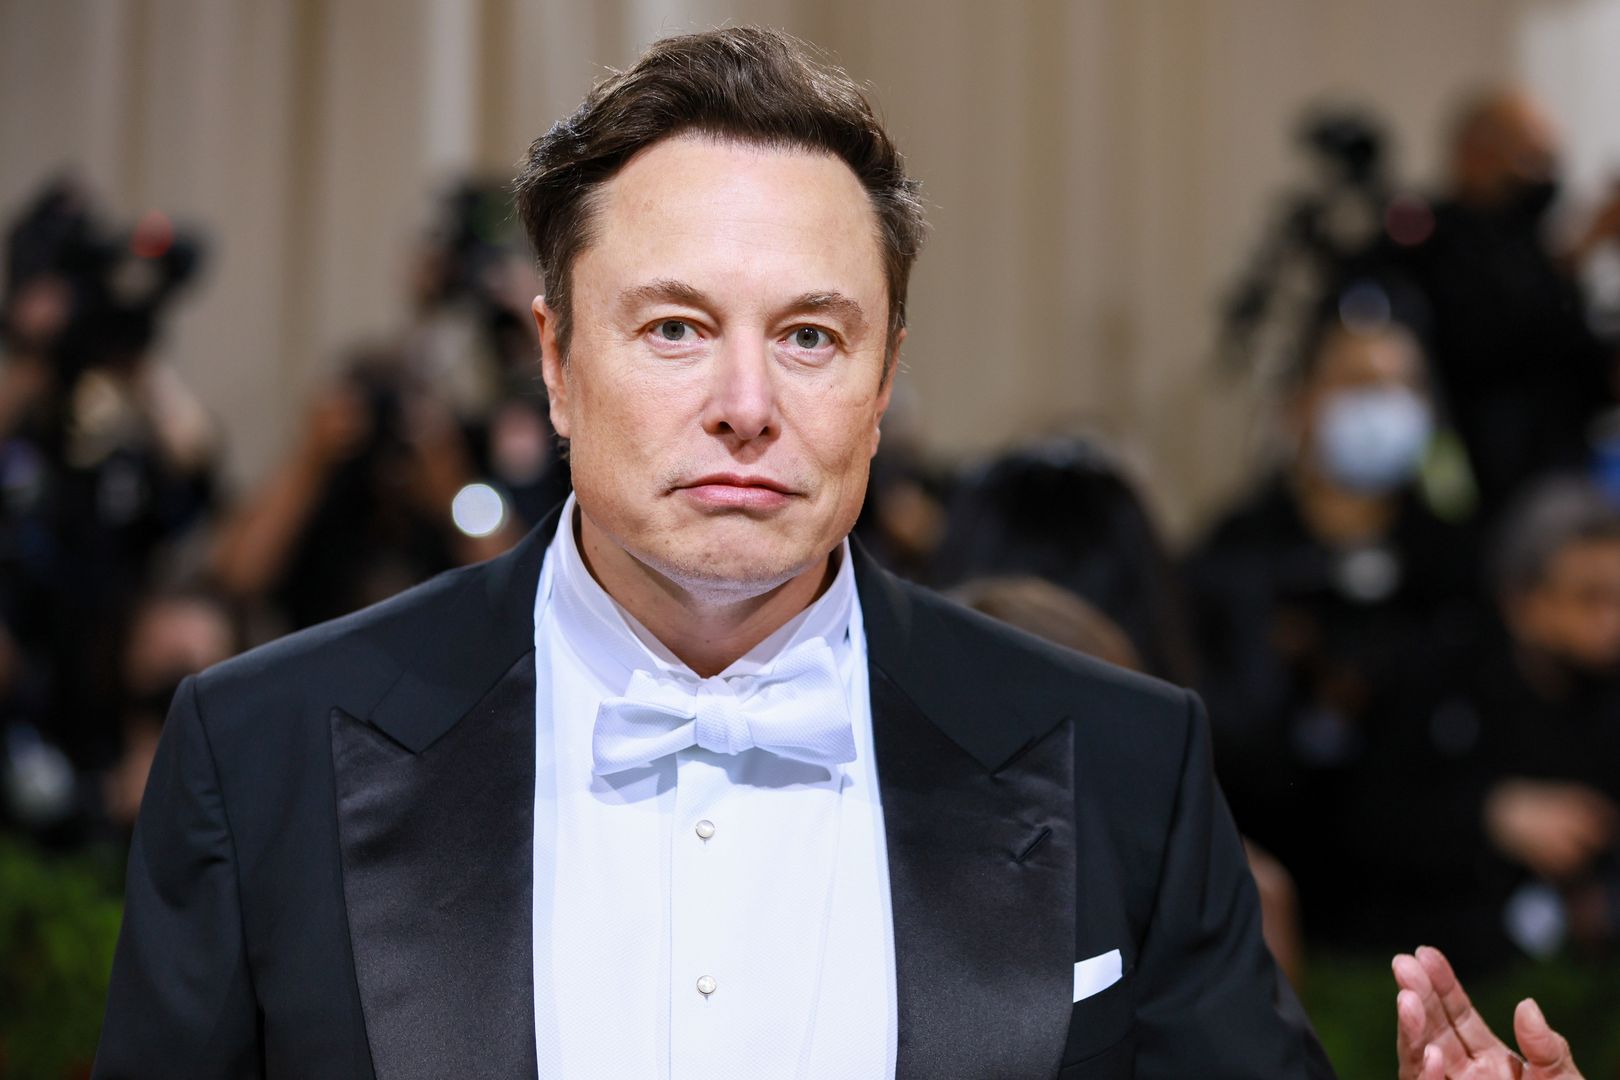 Elon Musk miał mieć romans z Nicole Shanahan. "Totalna bzdura"